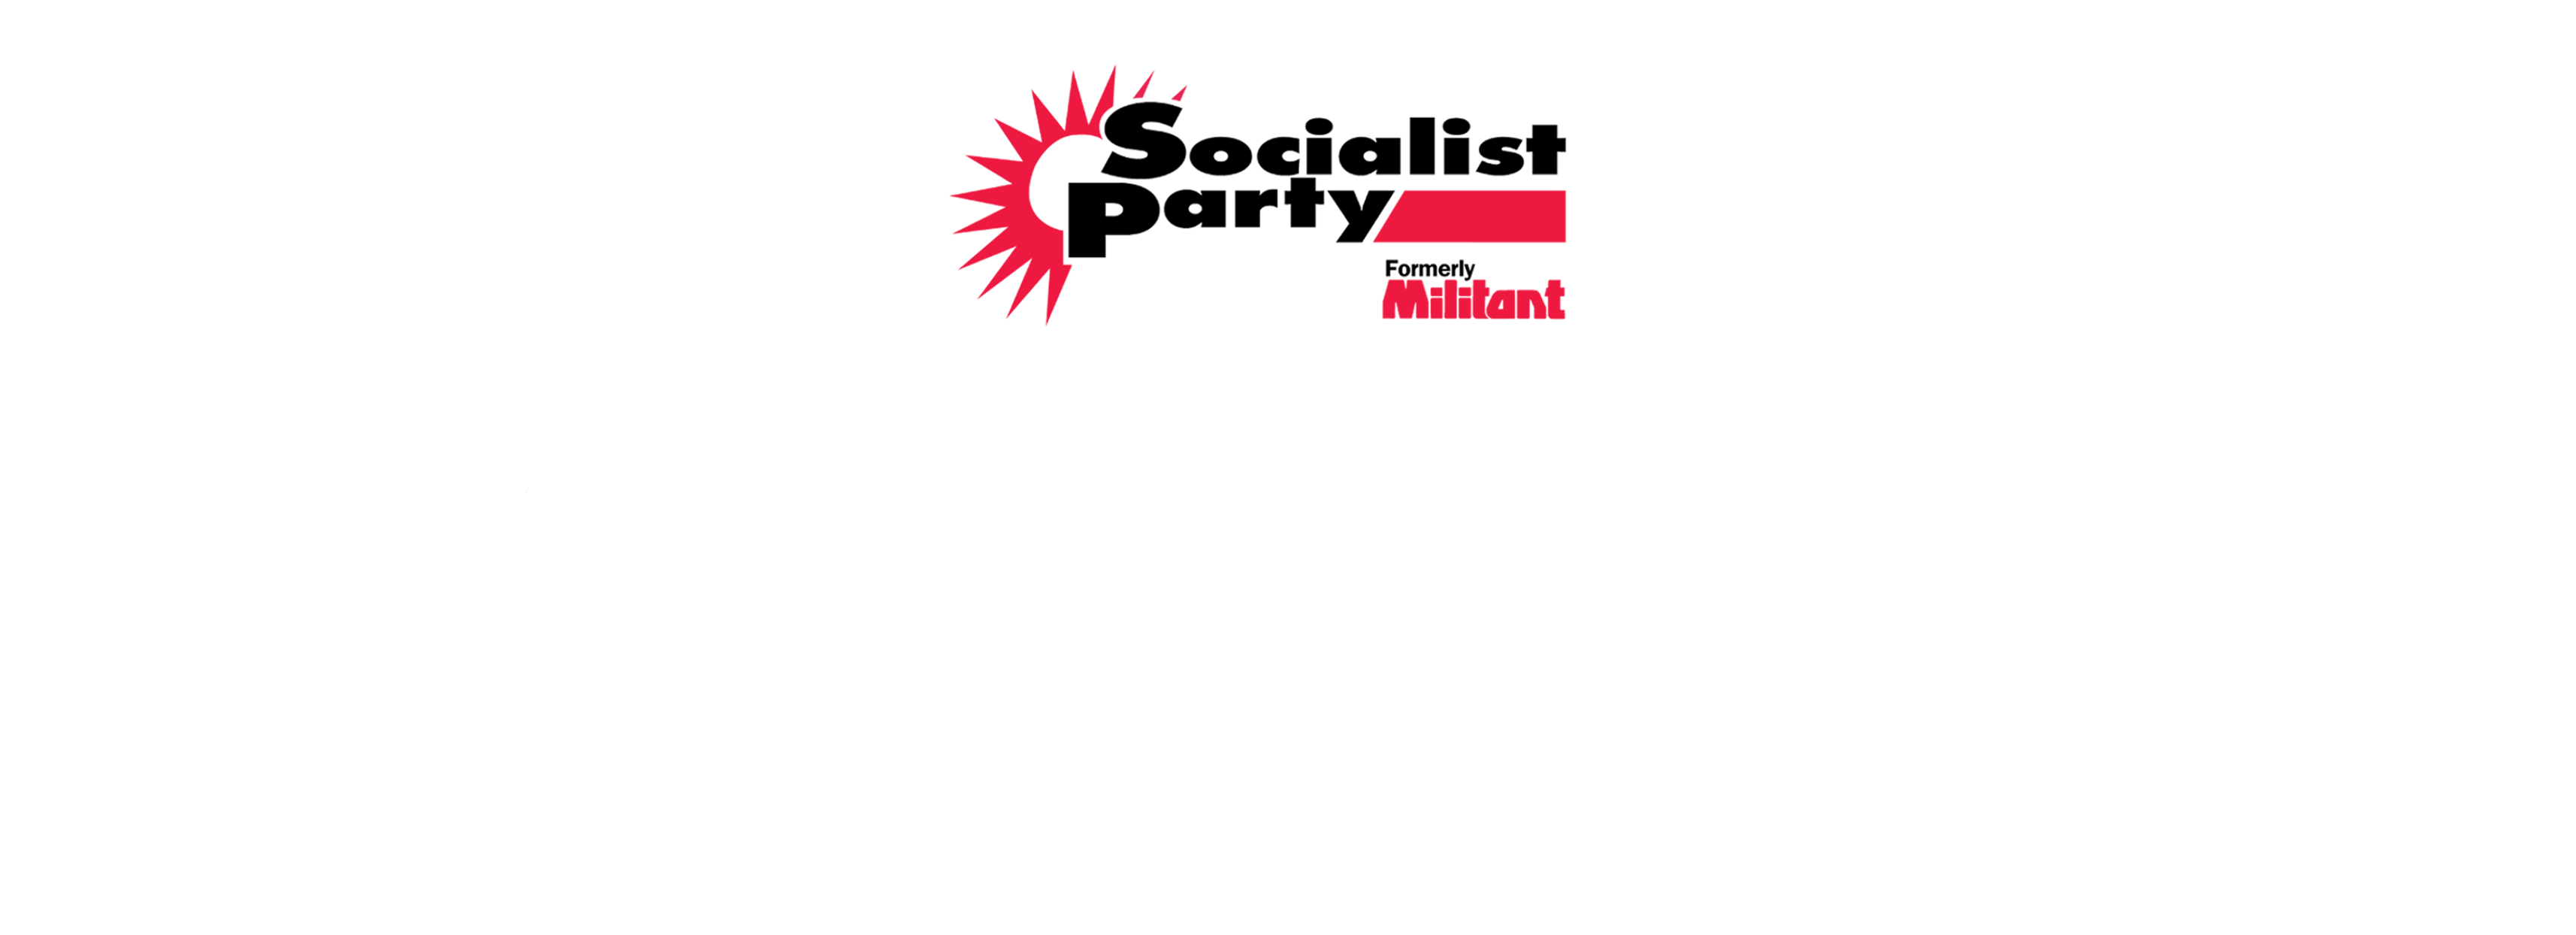 fighting clipart socialist